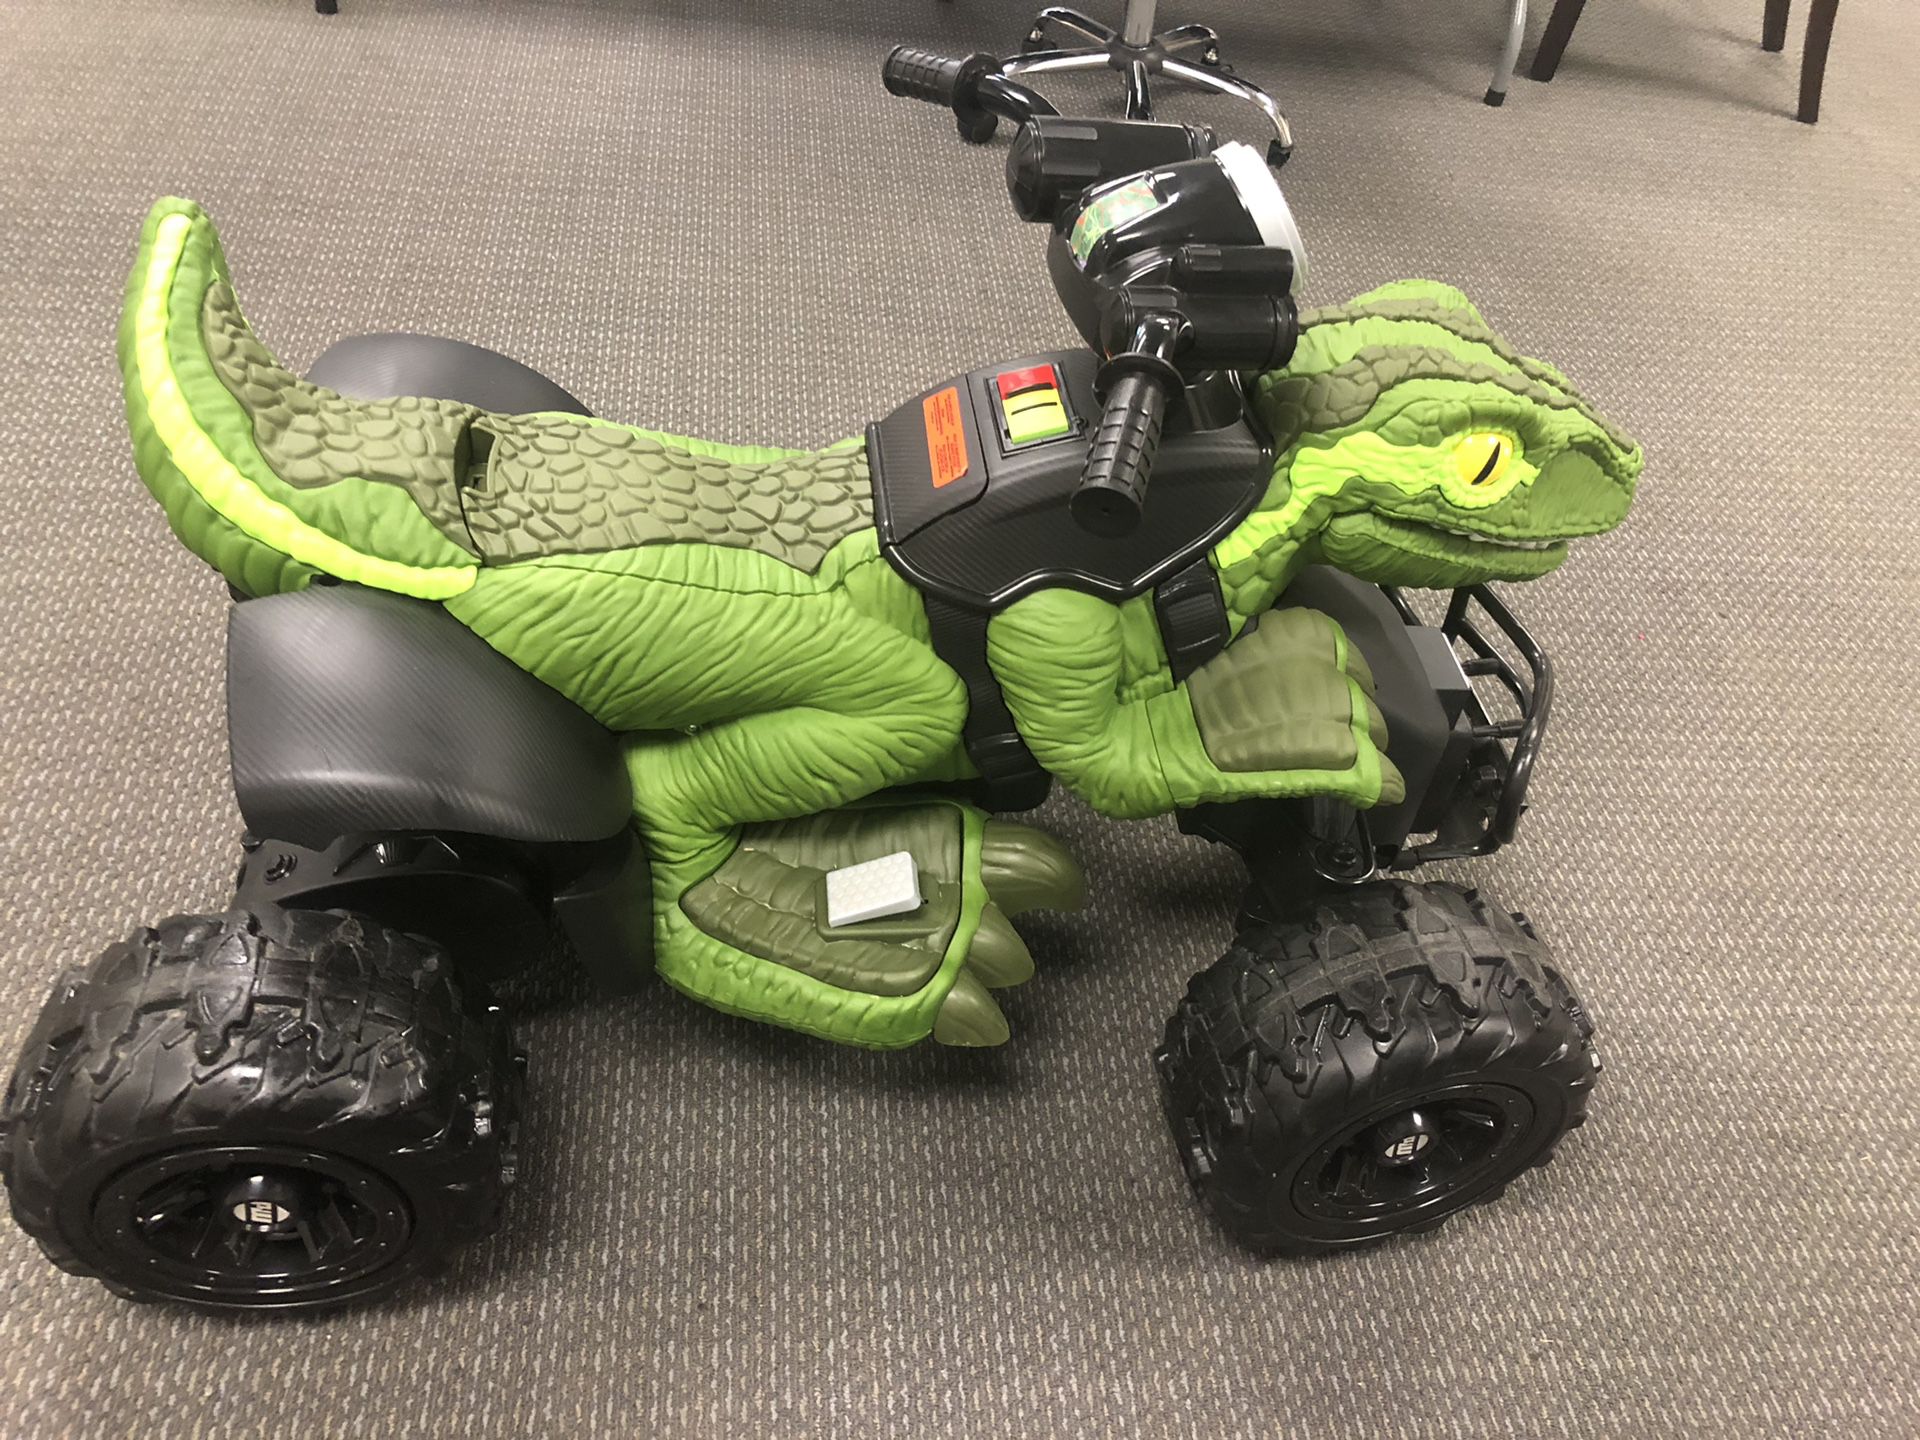 Great Christmas gift 🎁 Jurassic World ATV Quad